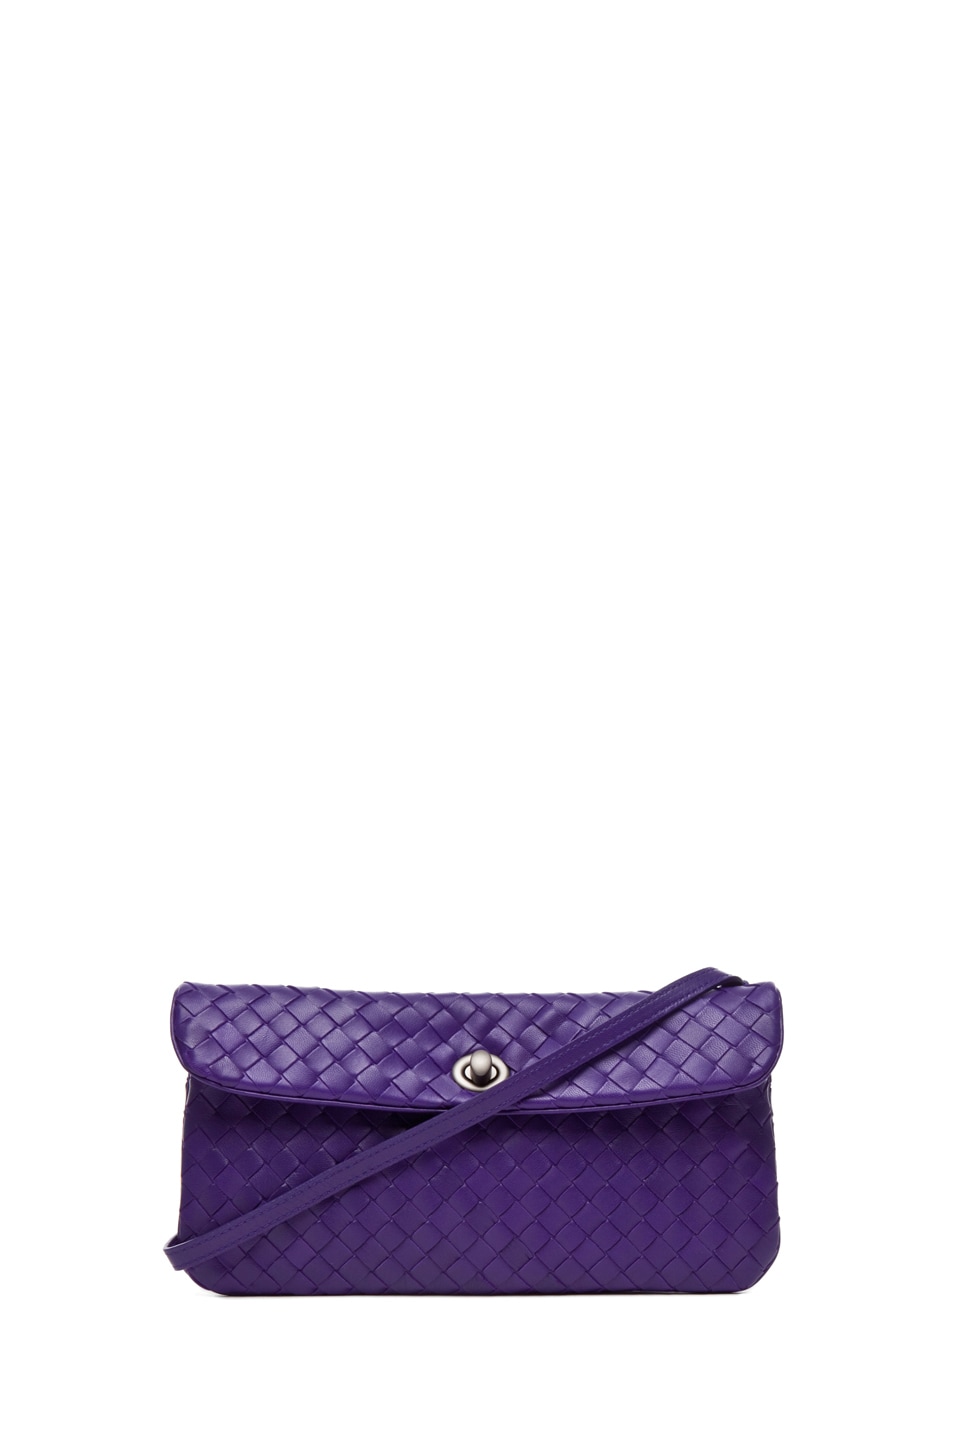 Bottega Veneta Crossbody Bag in Violet | FWRD